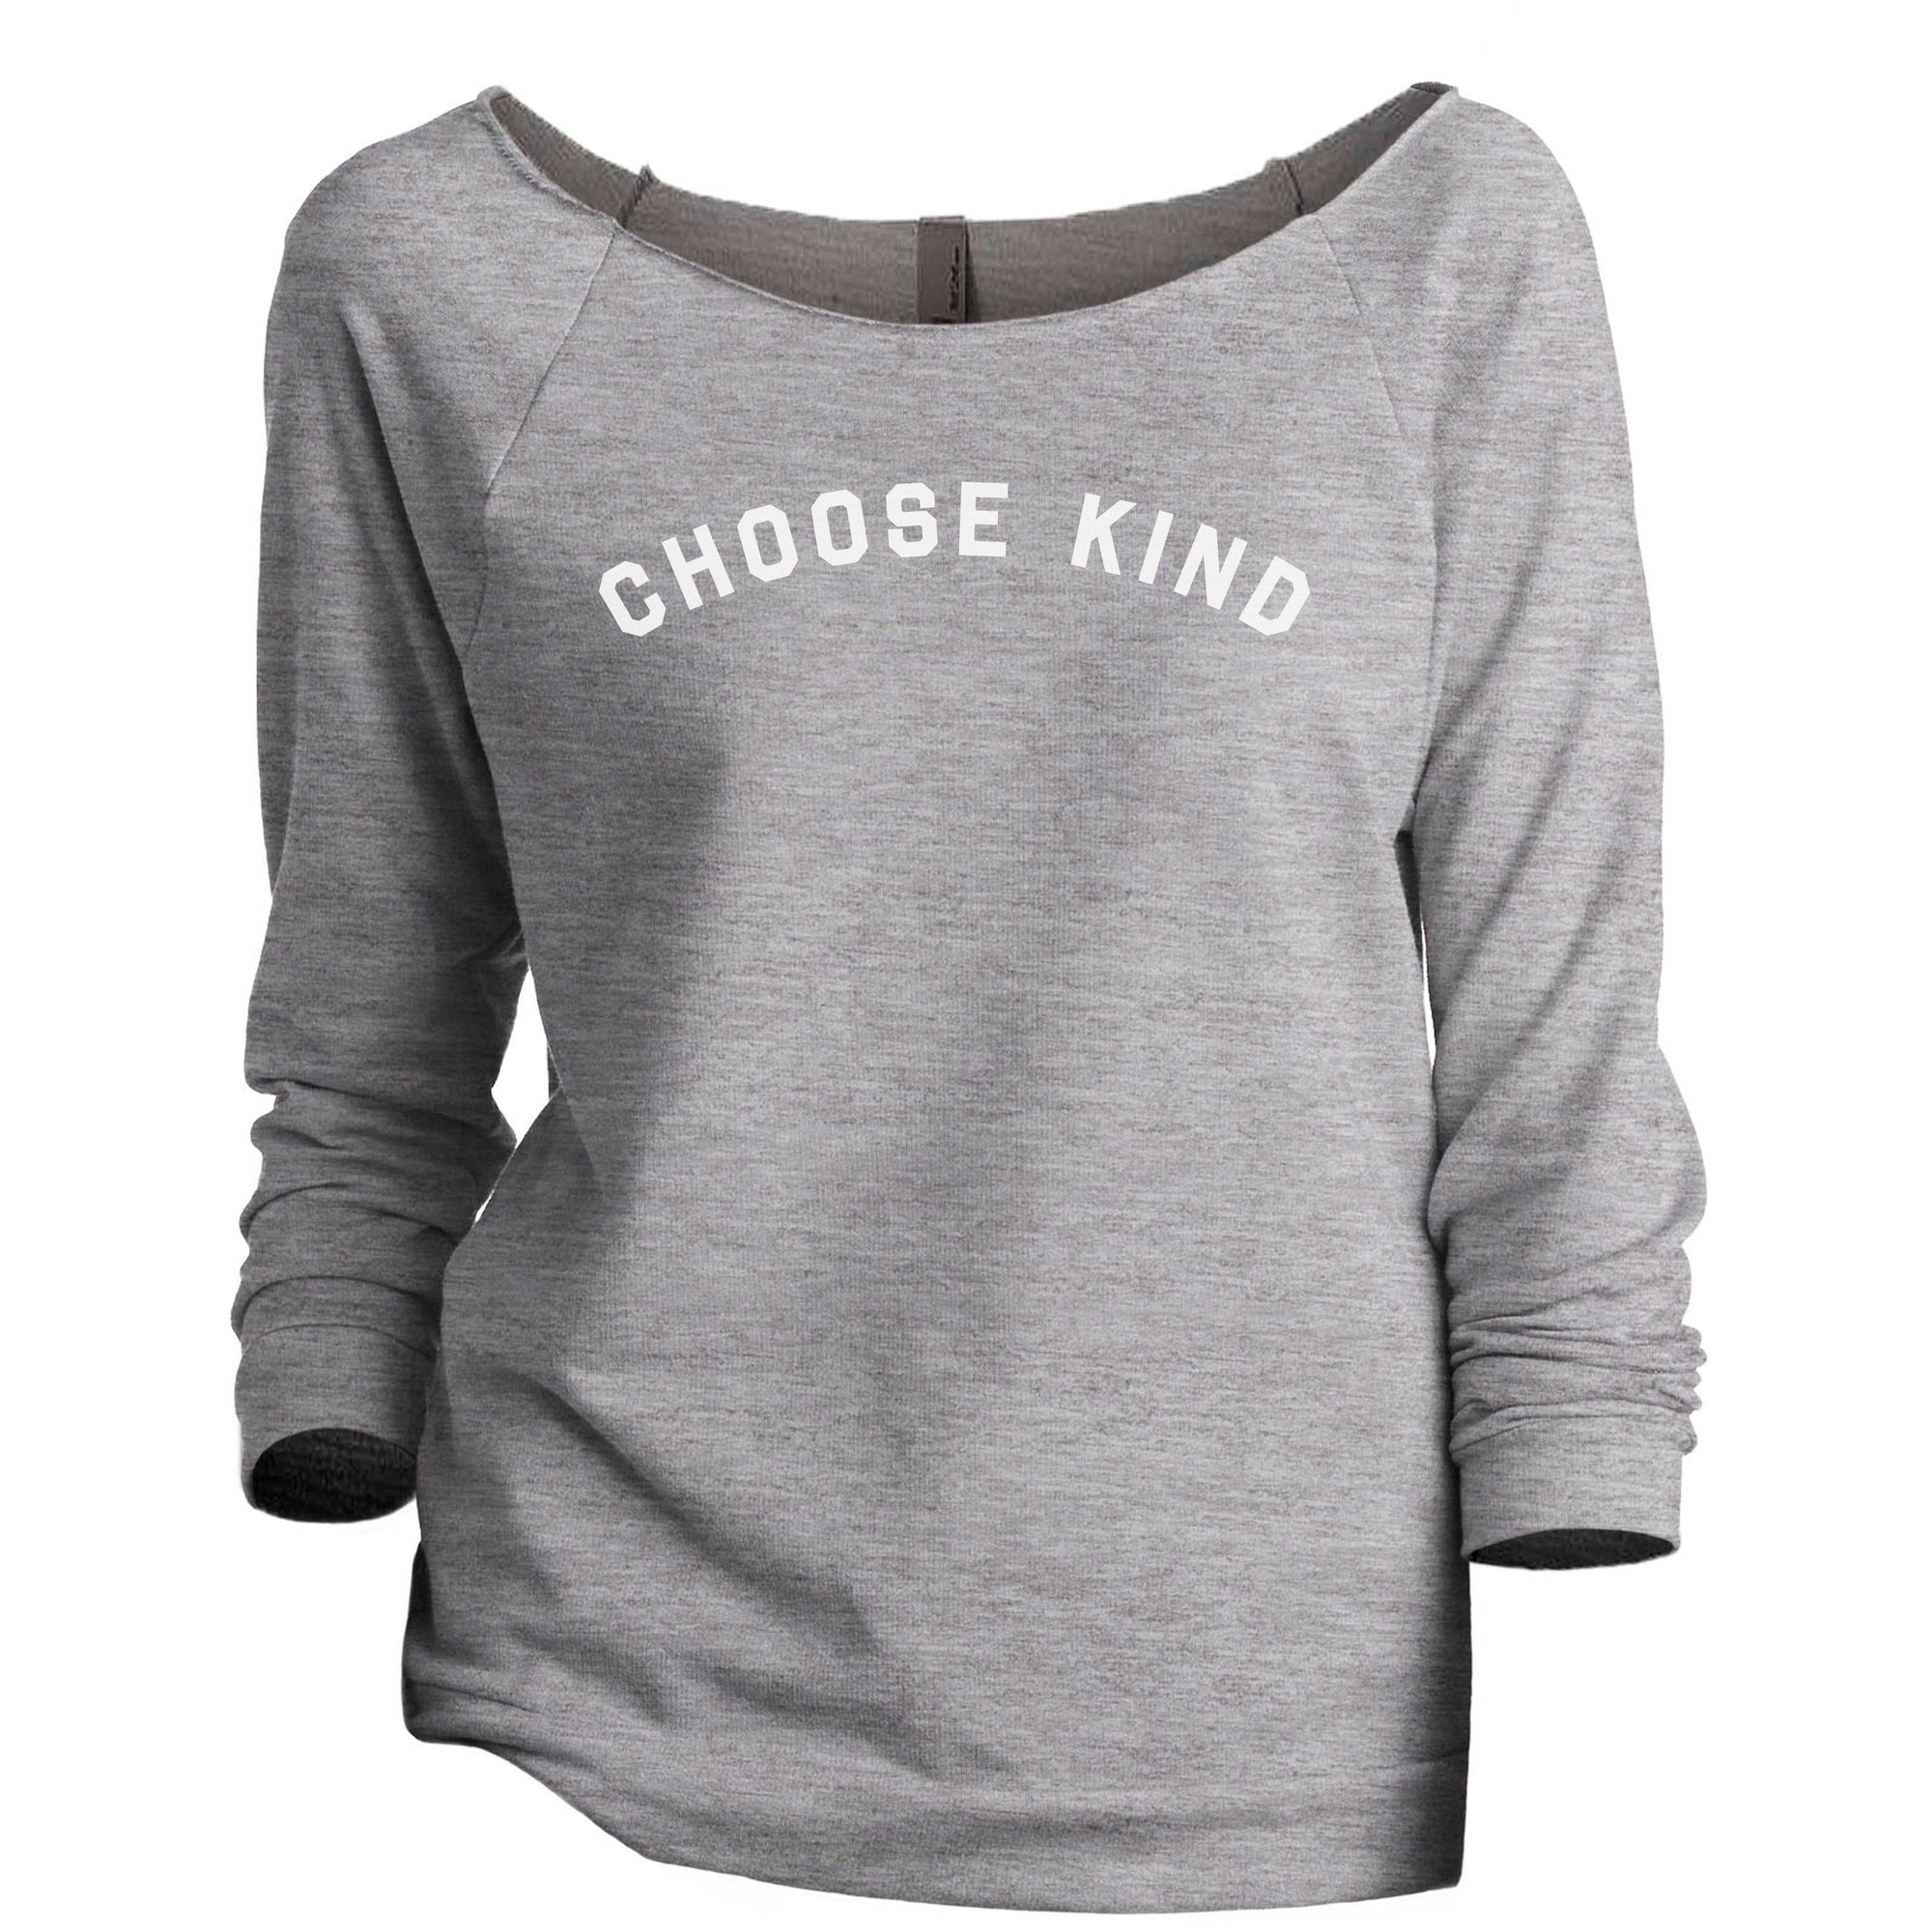 Choose Kind Women's Graphic Printed Lightweight Slouchy 3/4 Sleeves Sweatshirt Sport Grey